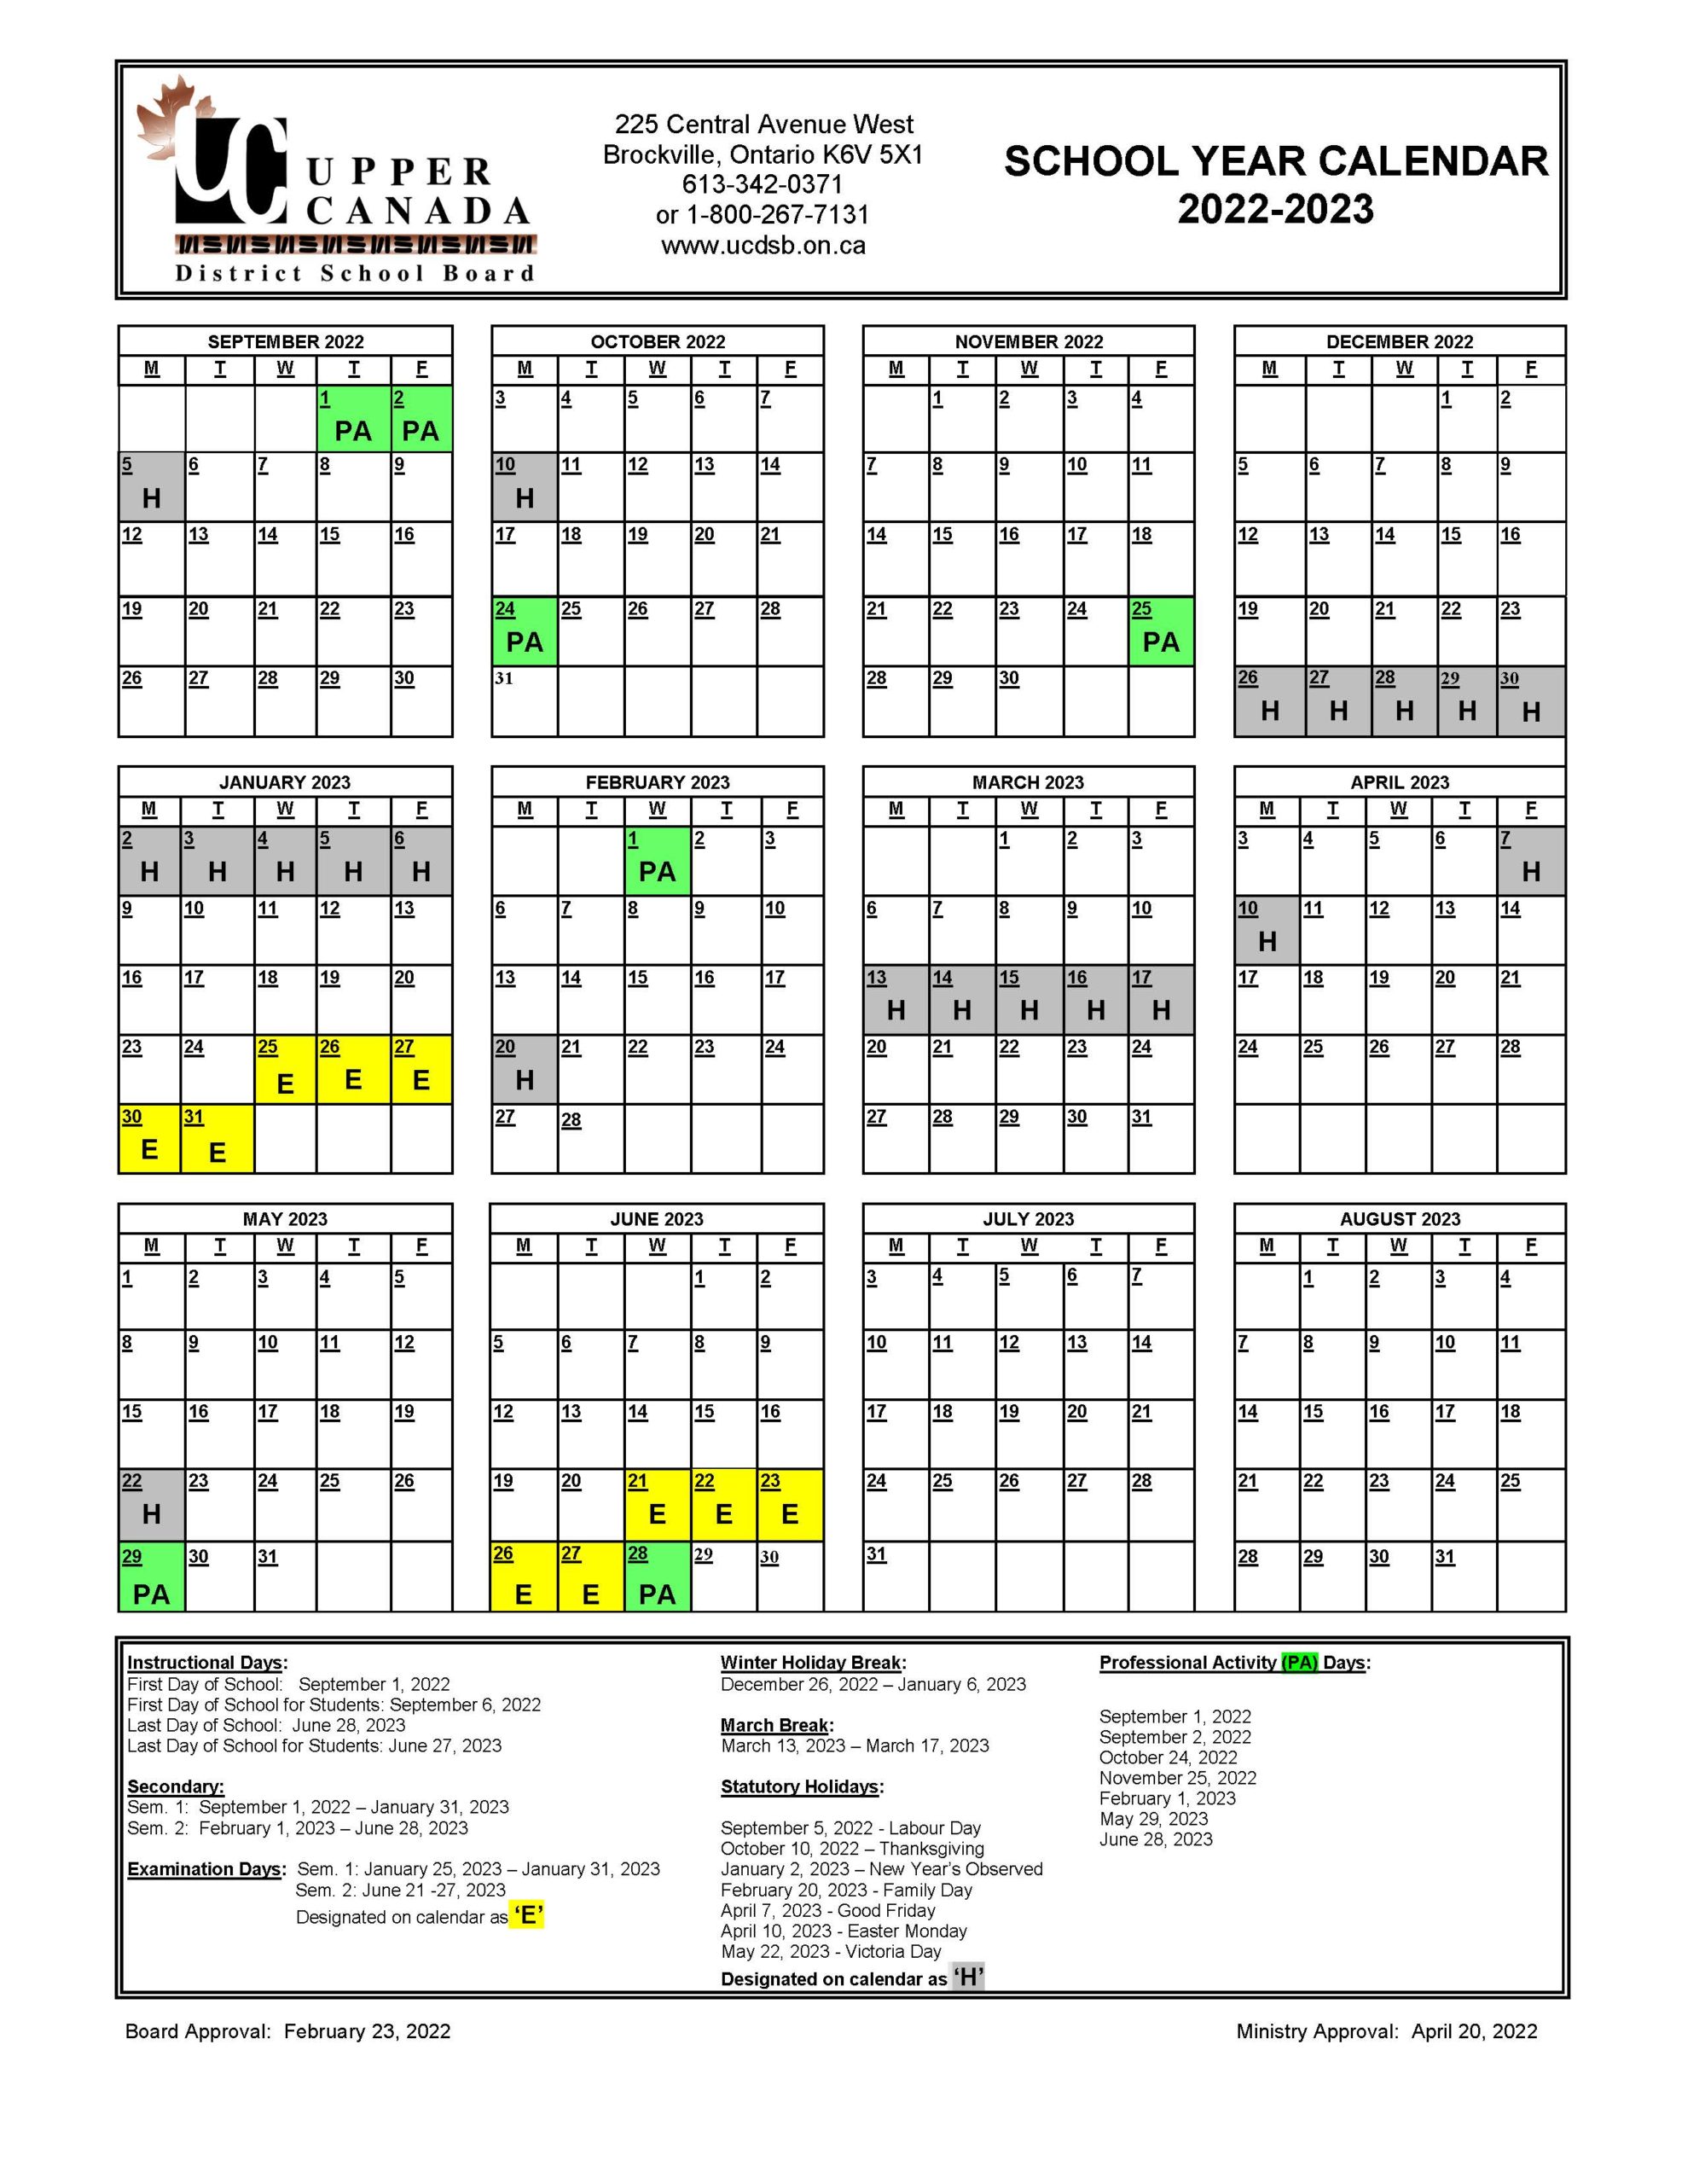 School Calendars Student Transportation of Eastern Ontario